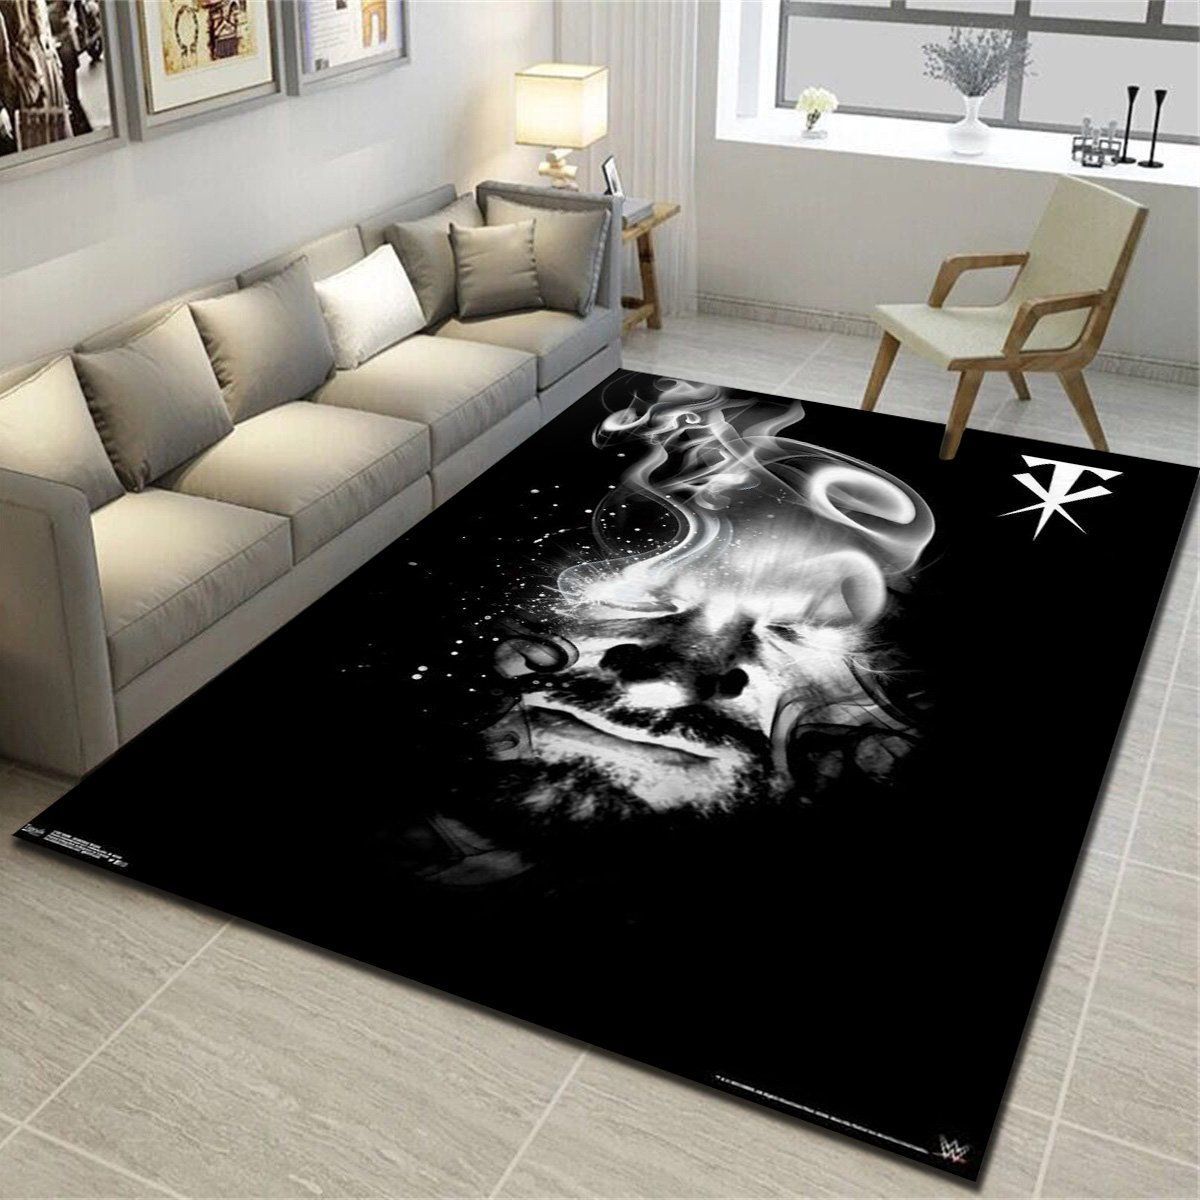 Wwe Undertaker Smoke Area Rugs, Living Room Carpet